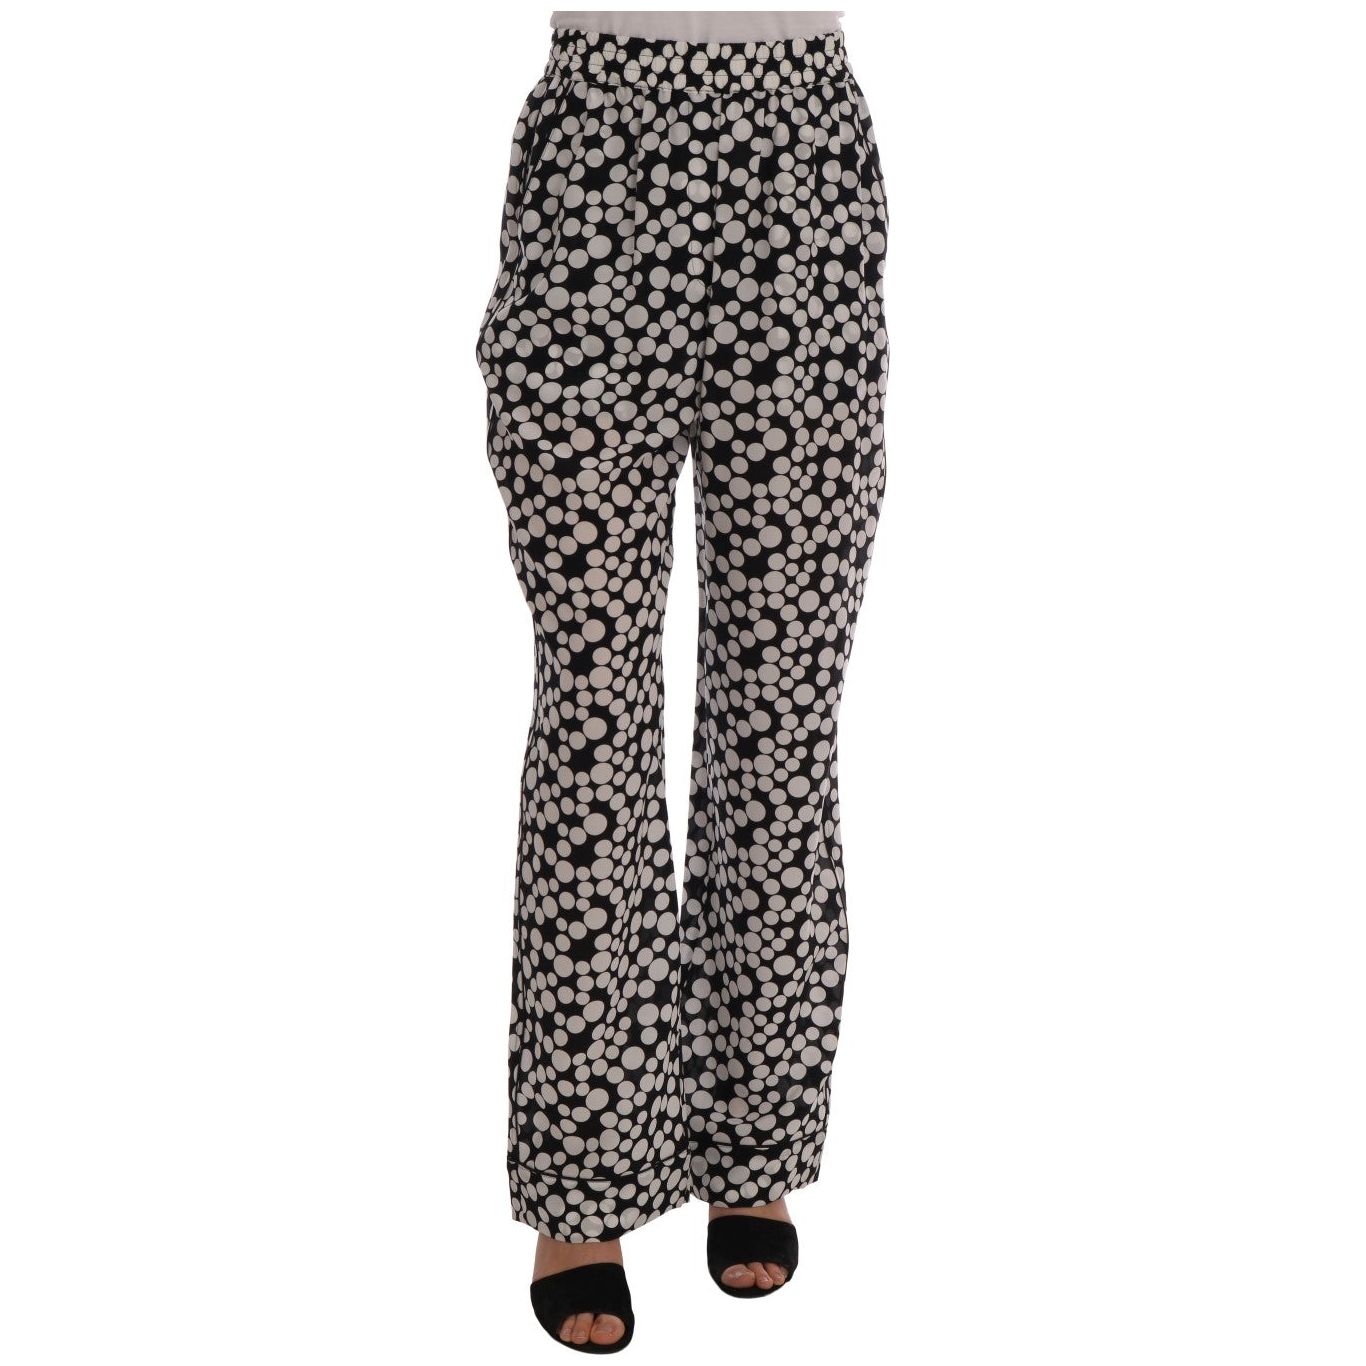 Dolce & Gabbana Elegant Polka Dot Silk High-Waist Pants black-white-polka-dottes-silk-pants Jeans & Pants 508363-black-white-polka-dottes-silk-pants.jpg